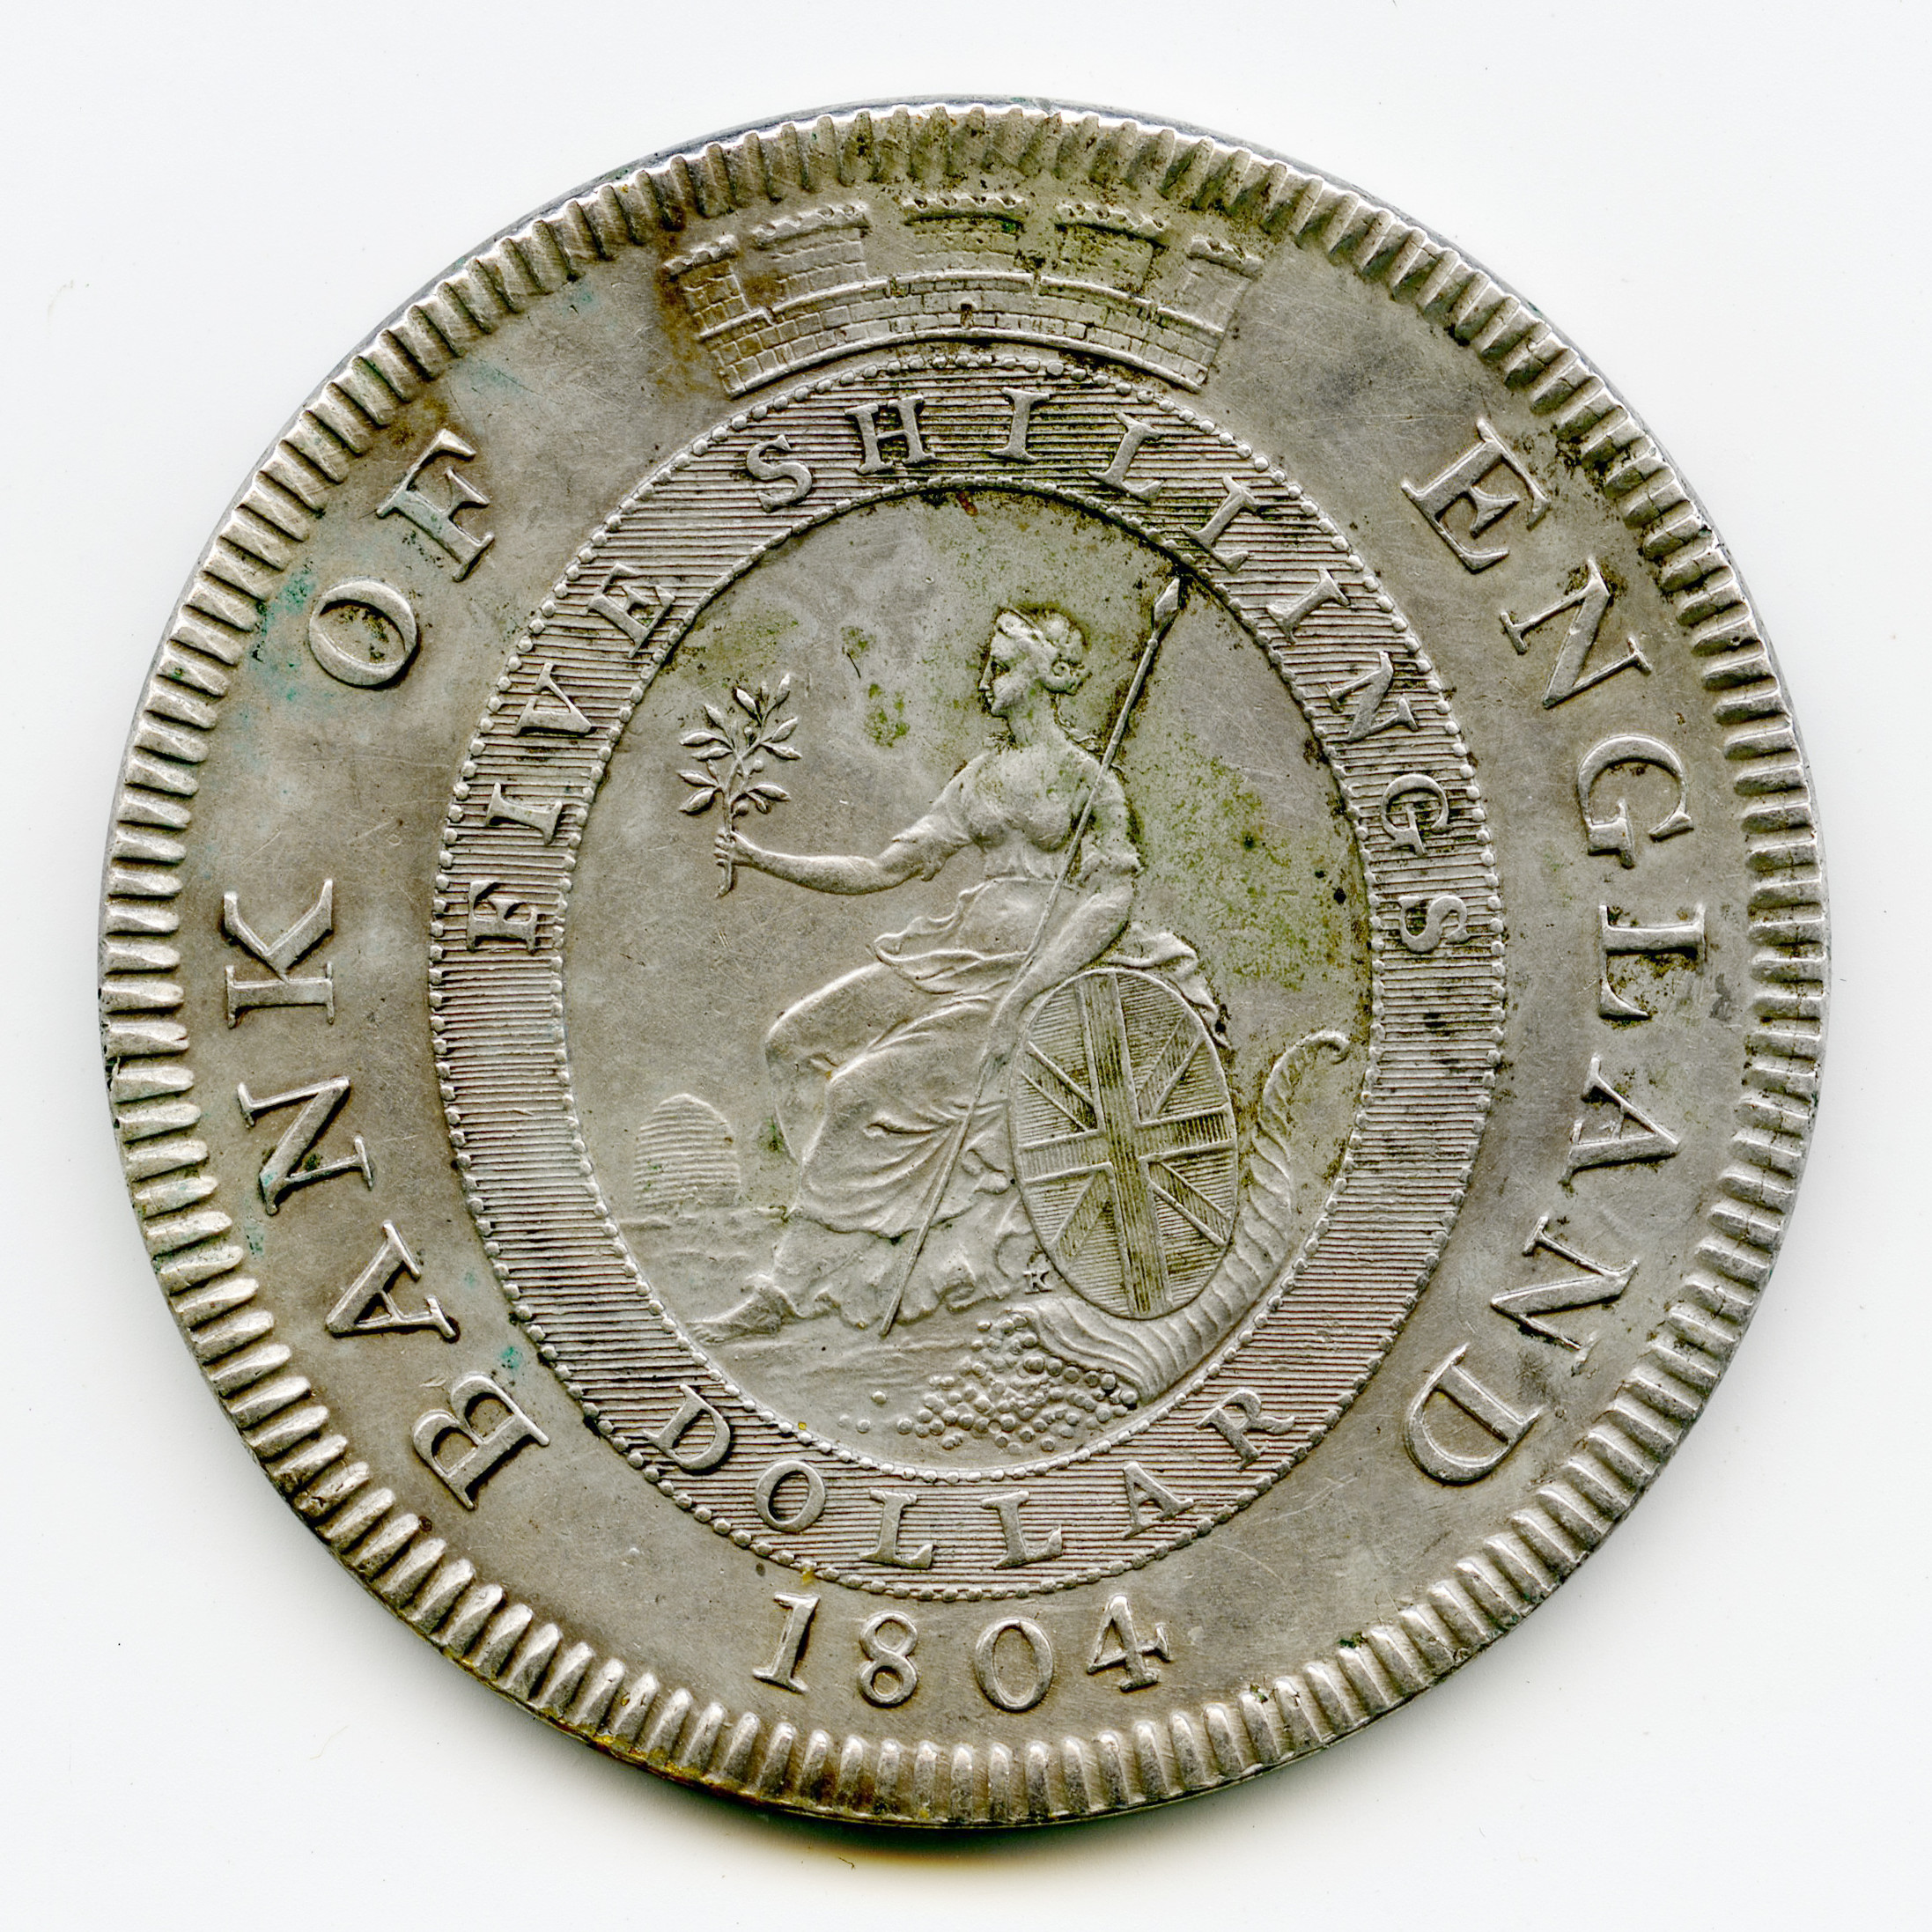 Grande-Bretagne - 1 Dollar - 1804 revers